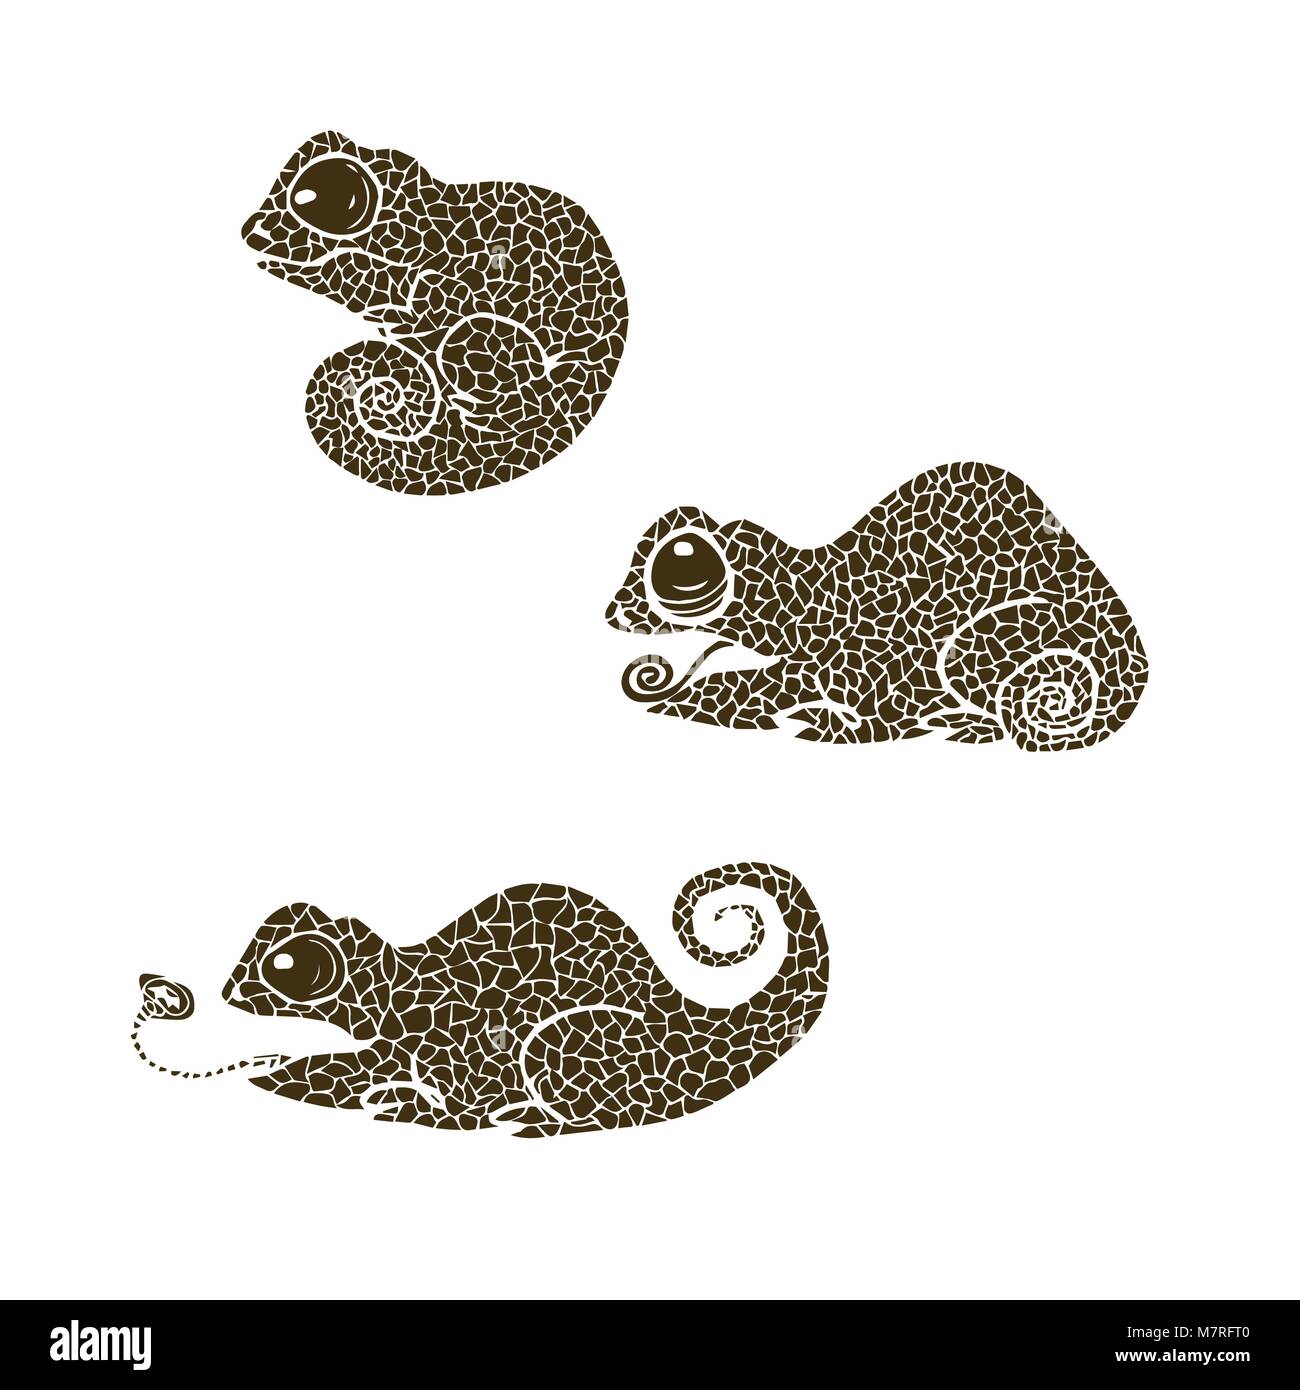 vector illustration silhouette of chameleon. Set of chameleons made in one color under the stencil Stock Vector